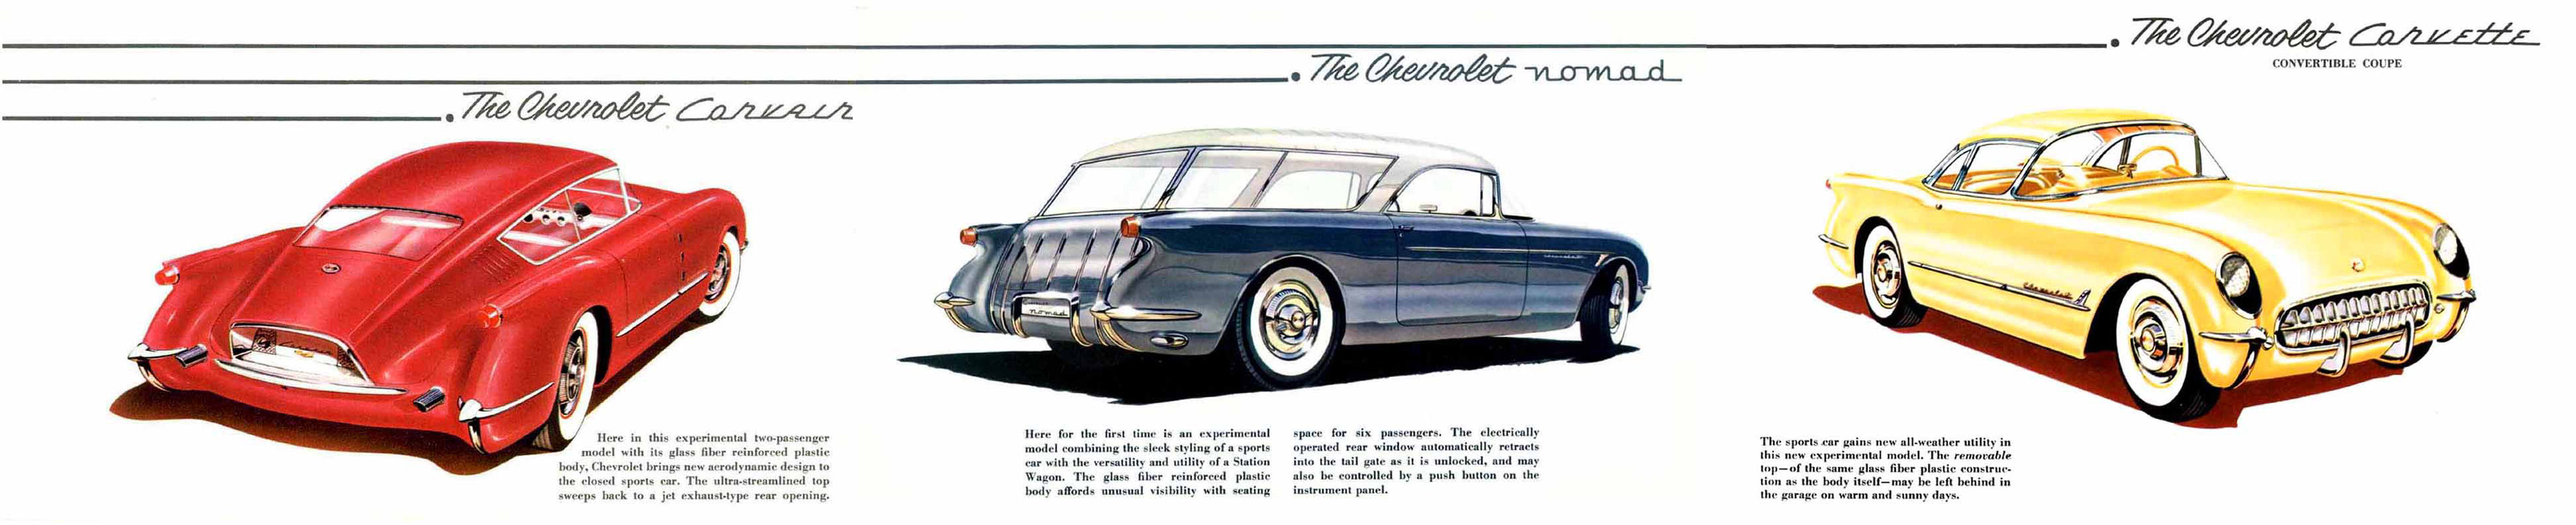 1954_GM_Motorama-Chevrolet-Rear